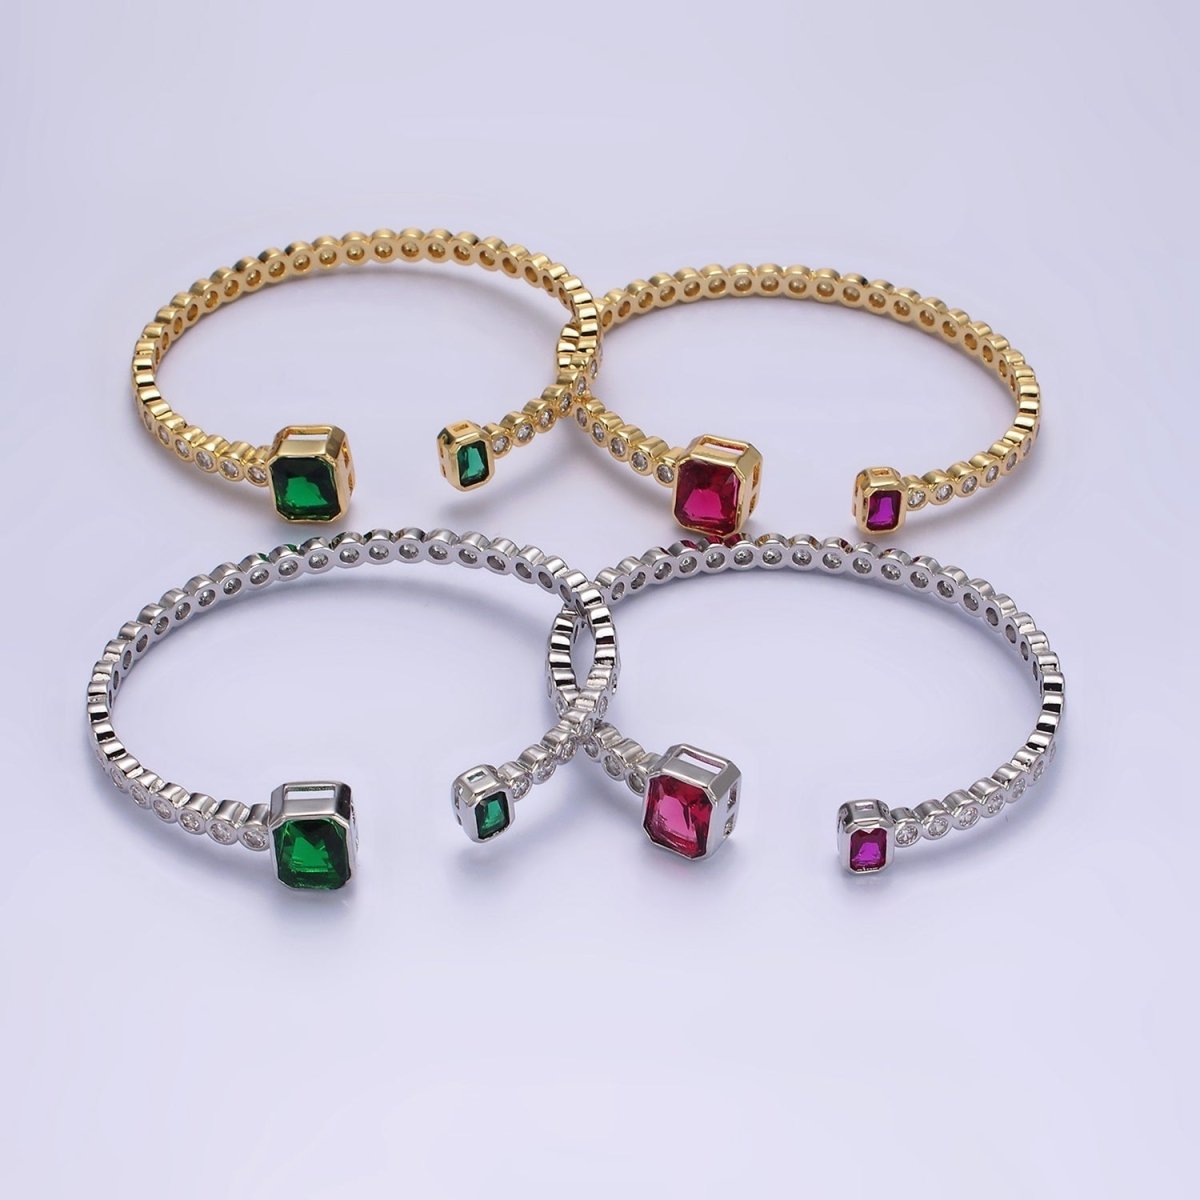 14K Gold Filled Green, Fuchsia Baguette Round CZ Lined Cuff Bracelet in Silver & Gold | WA-1974 - WA-1977 Clearance Pricing - DLUXCA